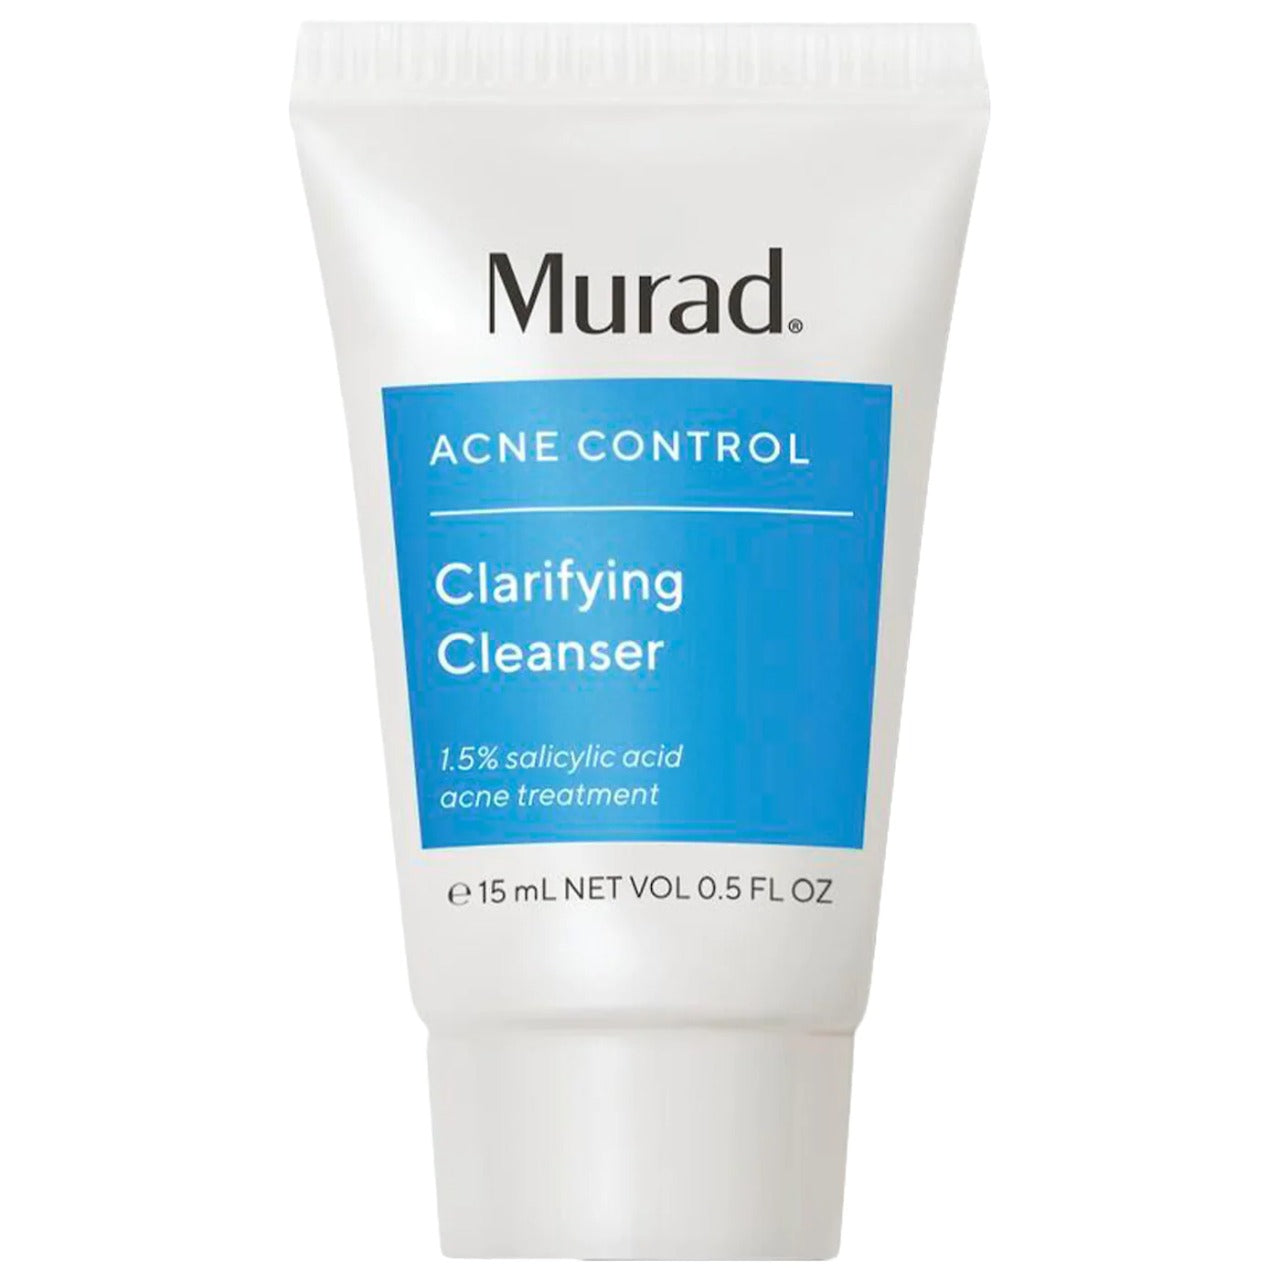 Murad Clarifying Cleanser trial size - 0.5 oz. / 15 mL